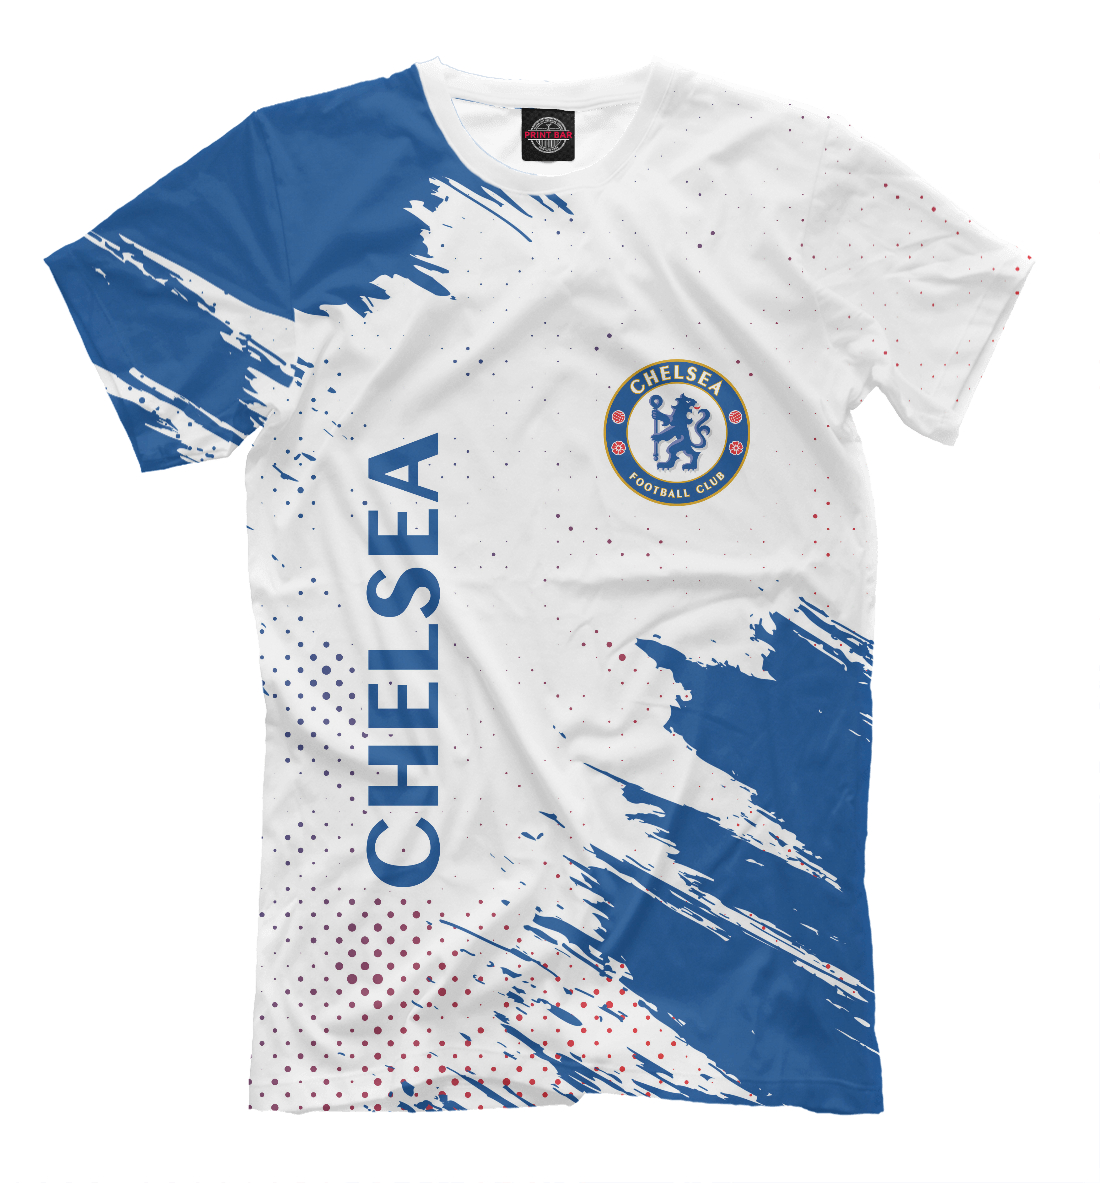 Футболка Chelsea F.C. / Челси для мужчин, артикул: CHL-673689-fut-2mp